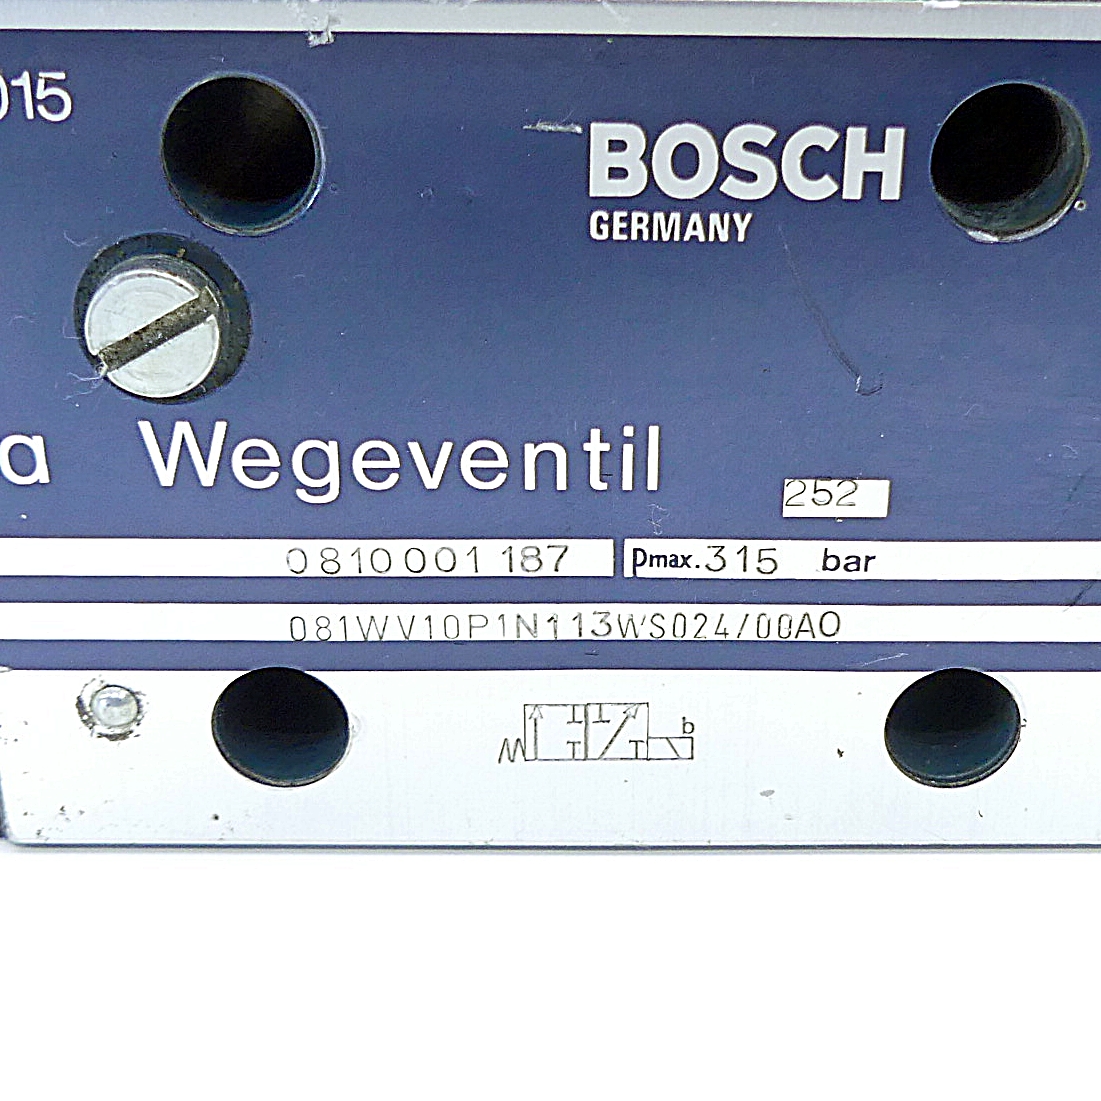 2/2 Wegeventil Bosch 081WV10P1N113WS024/00A0 